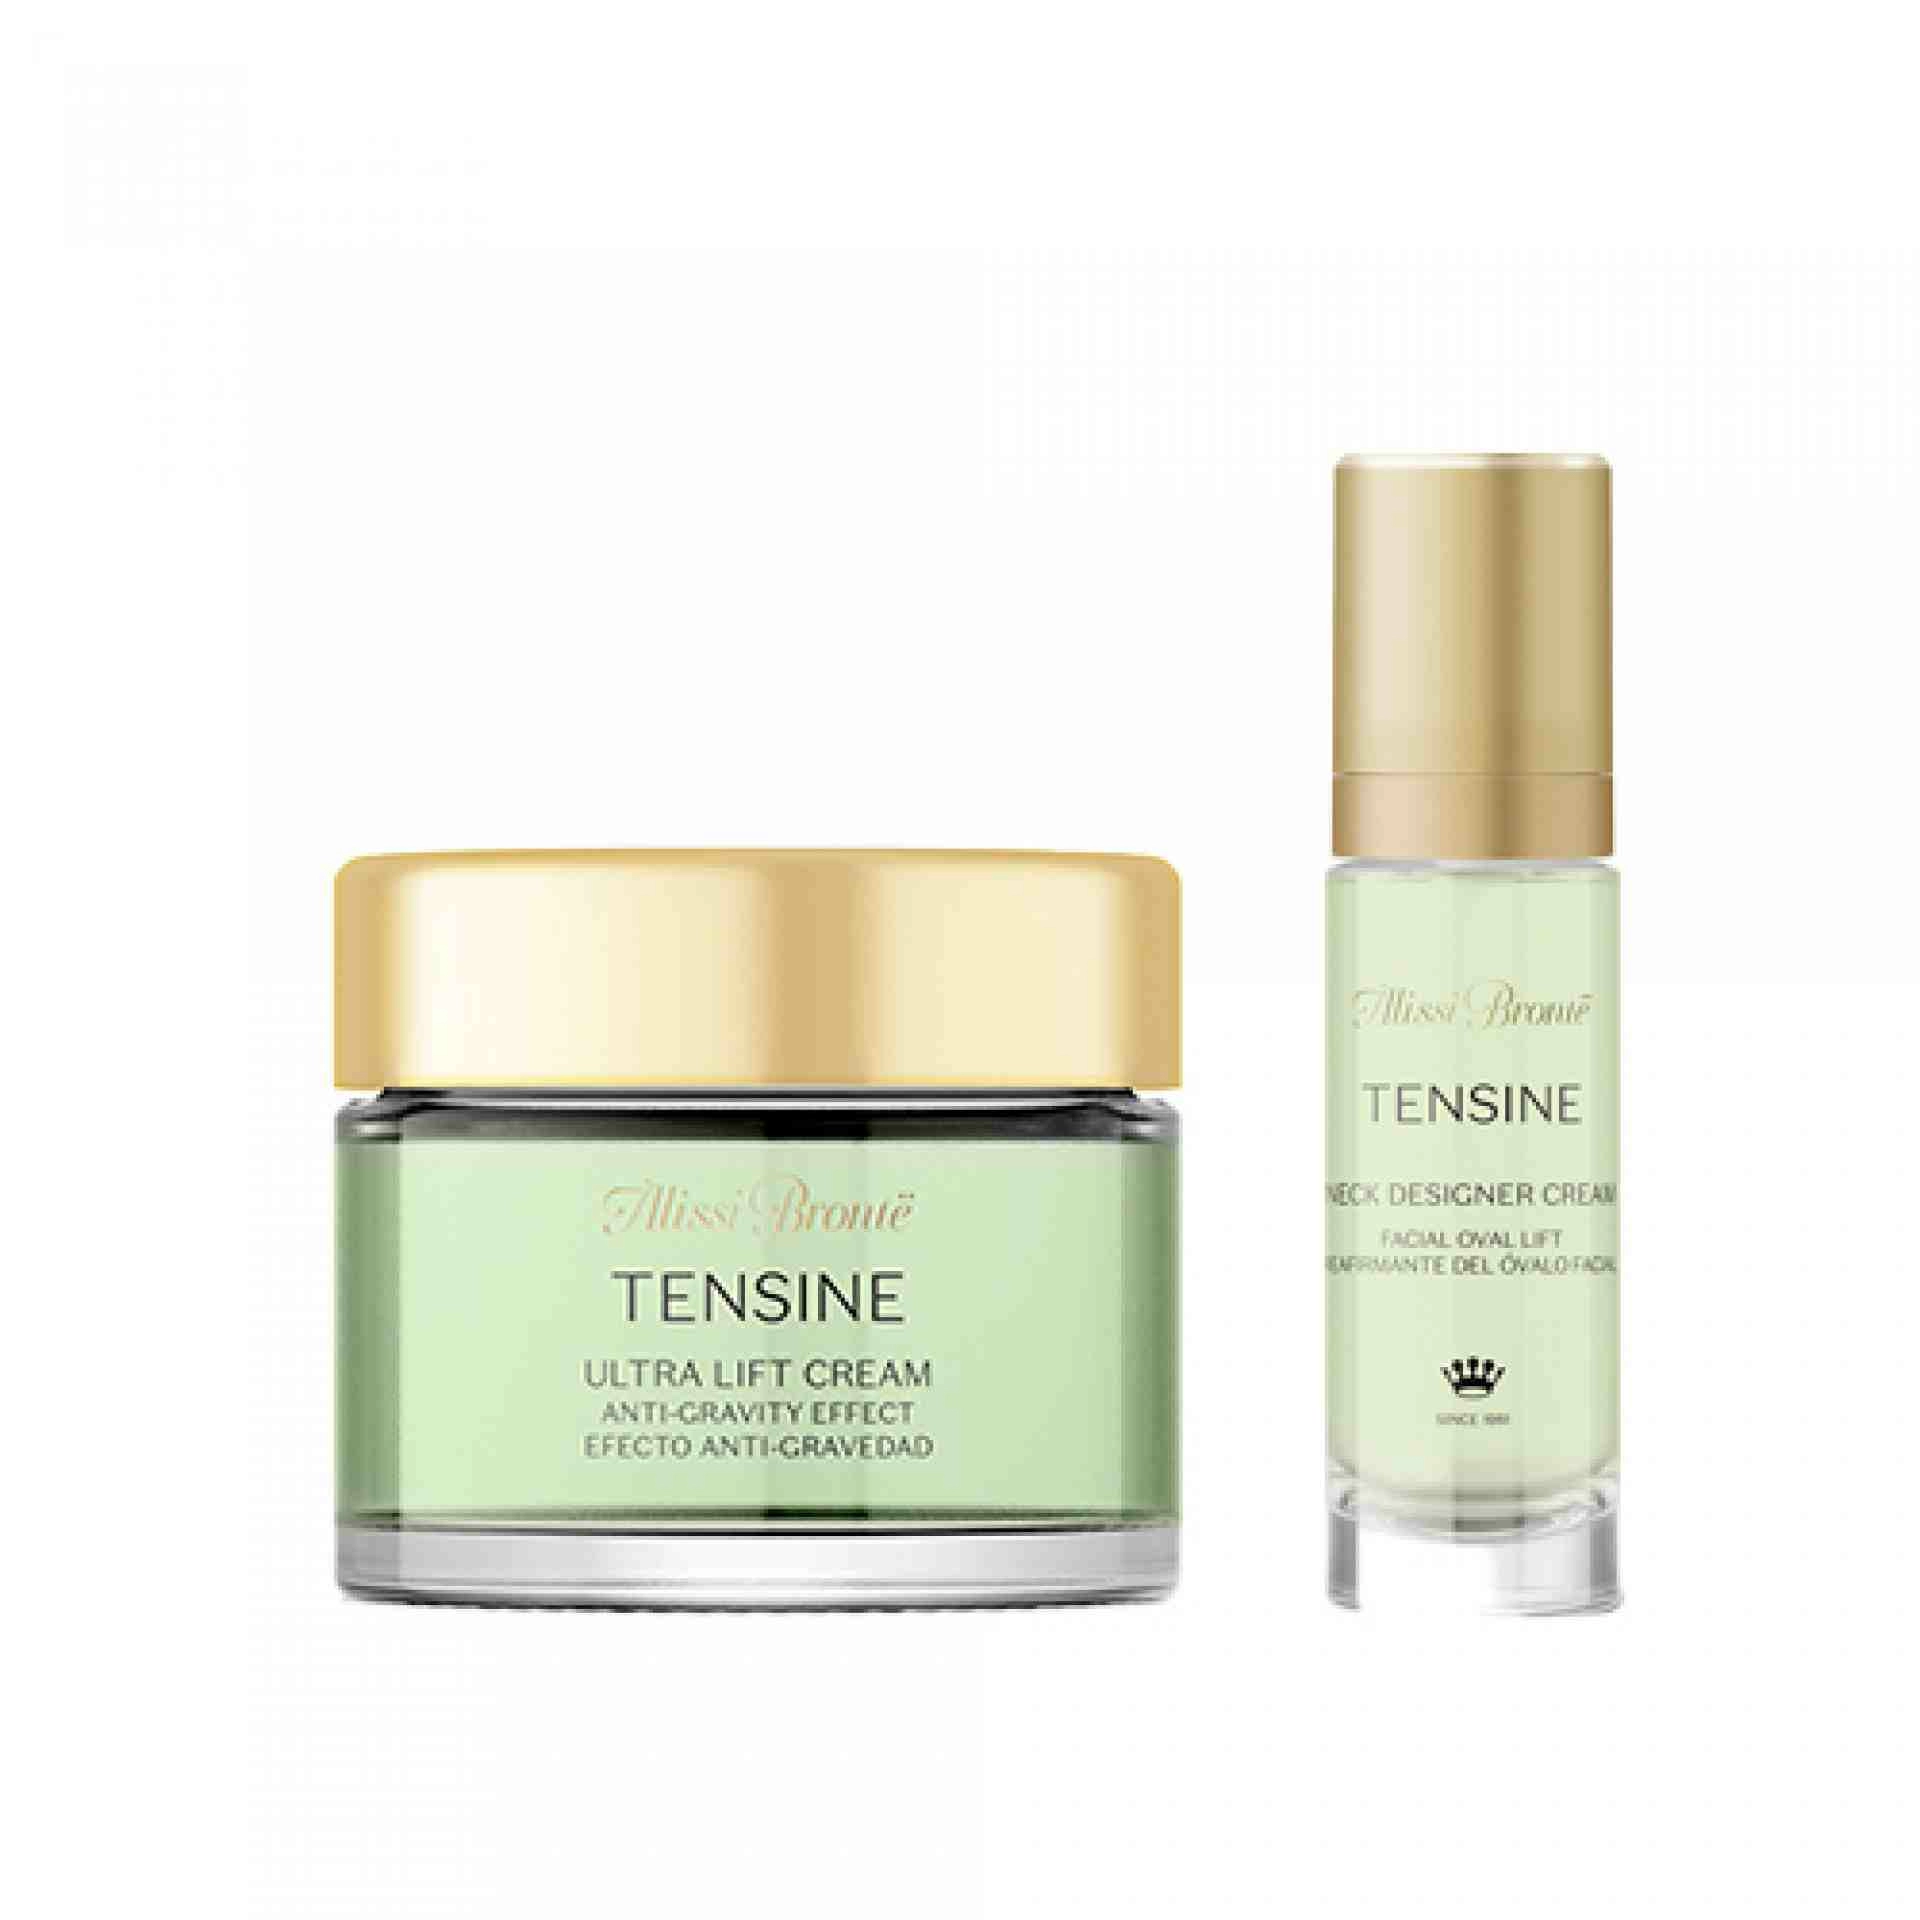 Cofre Tensine | Ultra Lift Cream 50ml y Neck Designer Cream 30ml - Reafirmante - Alissi Brontë ®